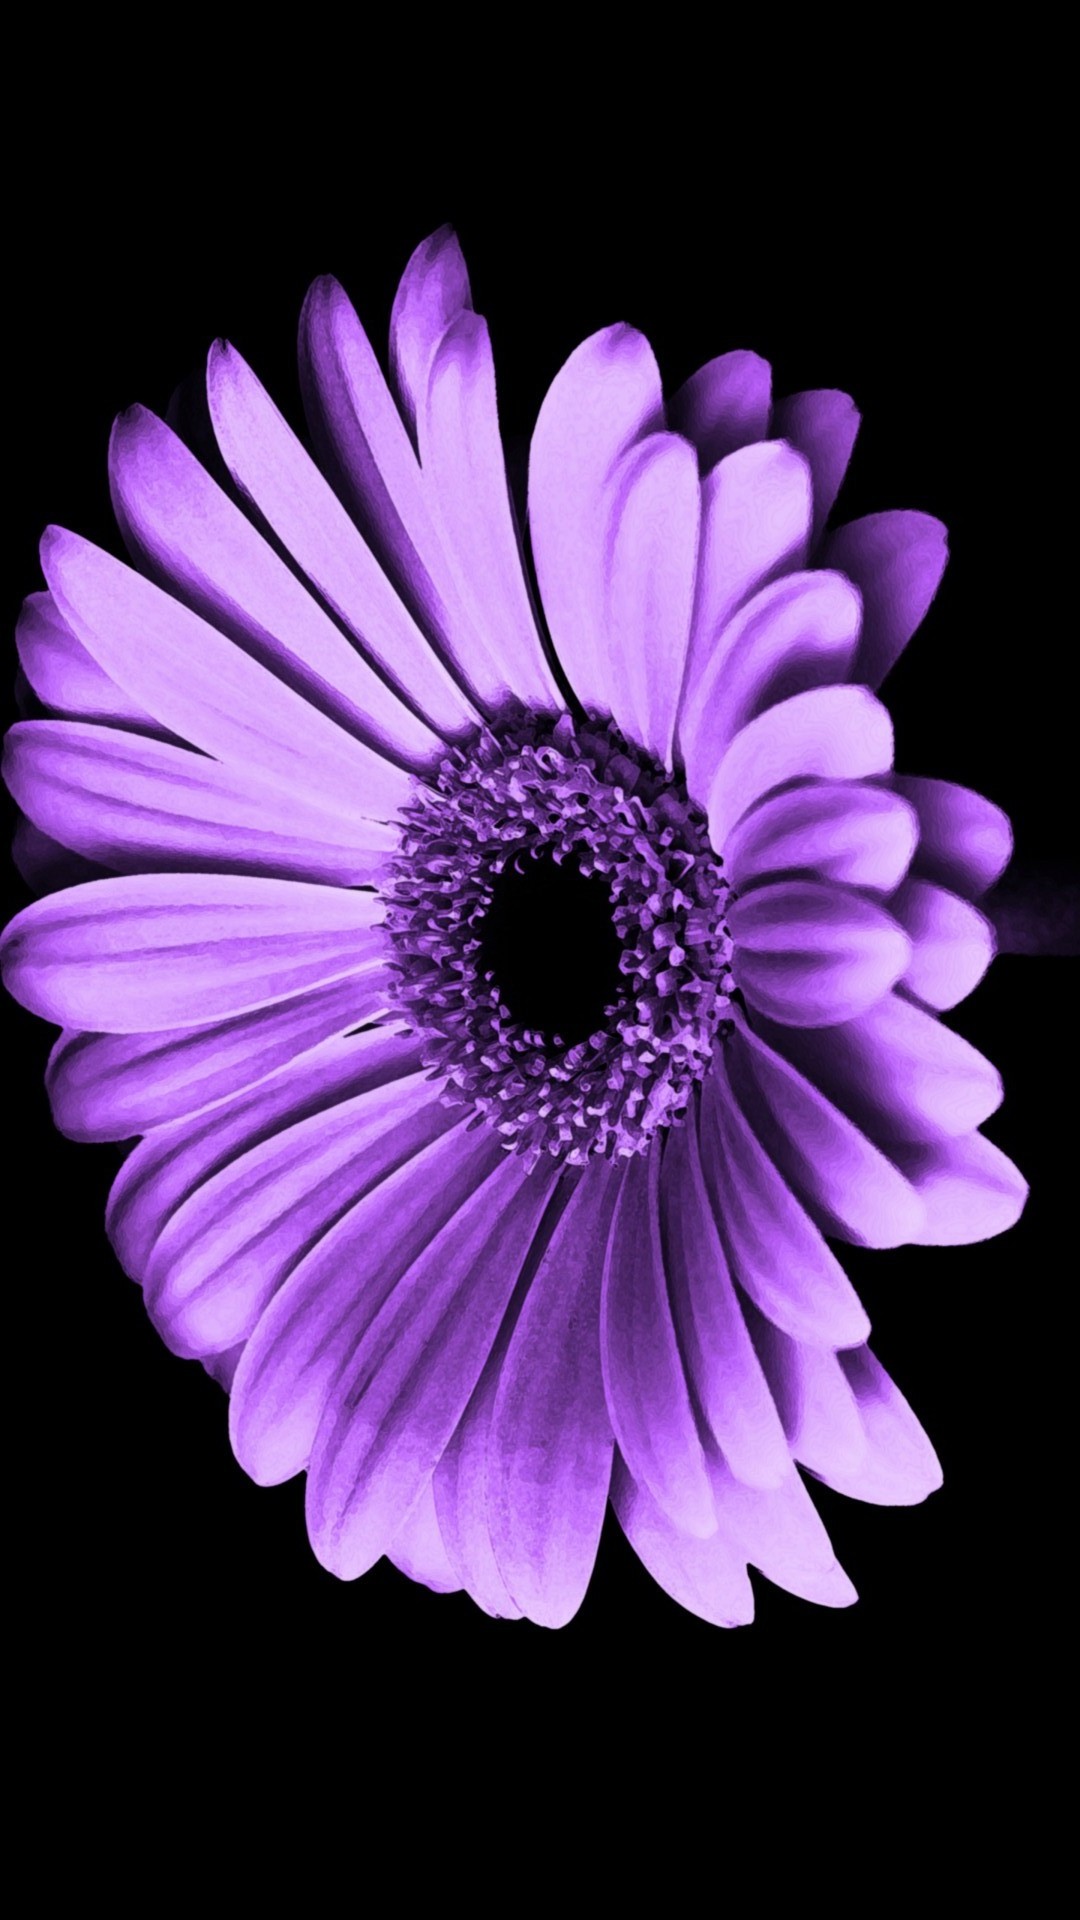 Purple Flowers iPhone Wallpaper HD | 2021 Cute Wallpapers